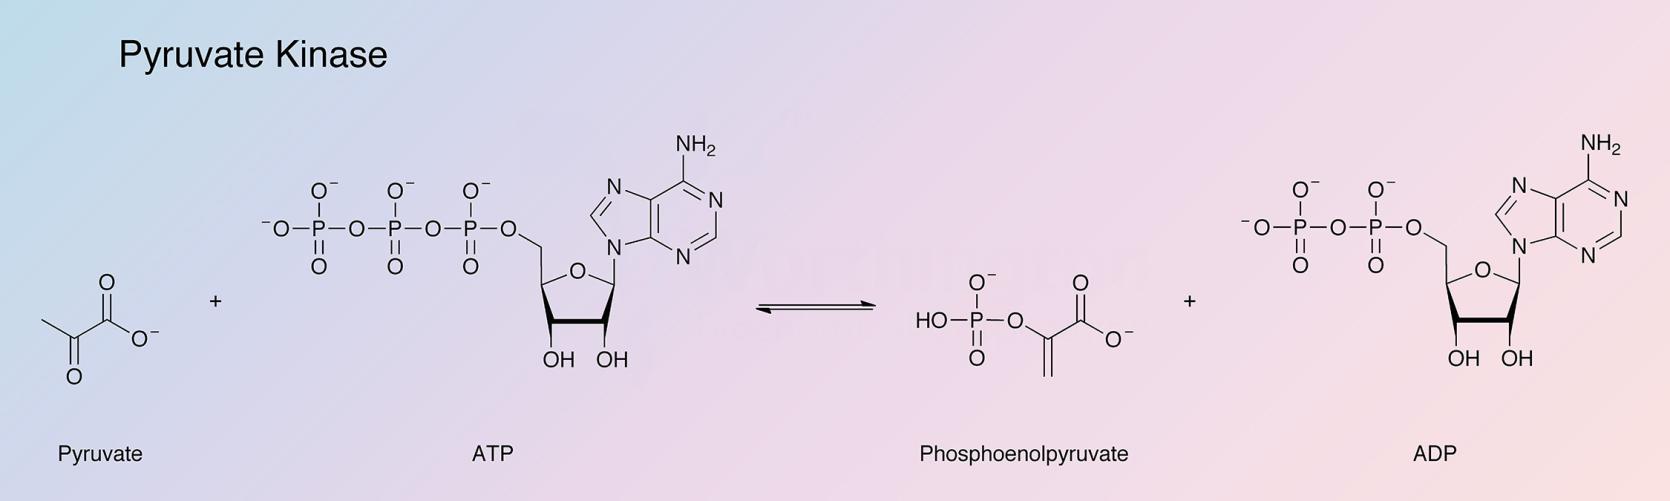 Pyruvate Kinase Enzymatic Reaction